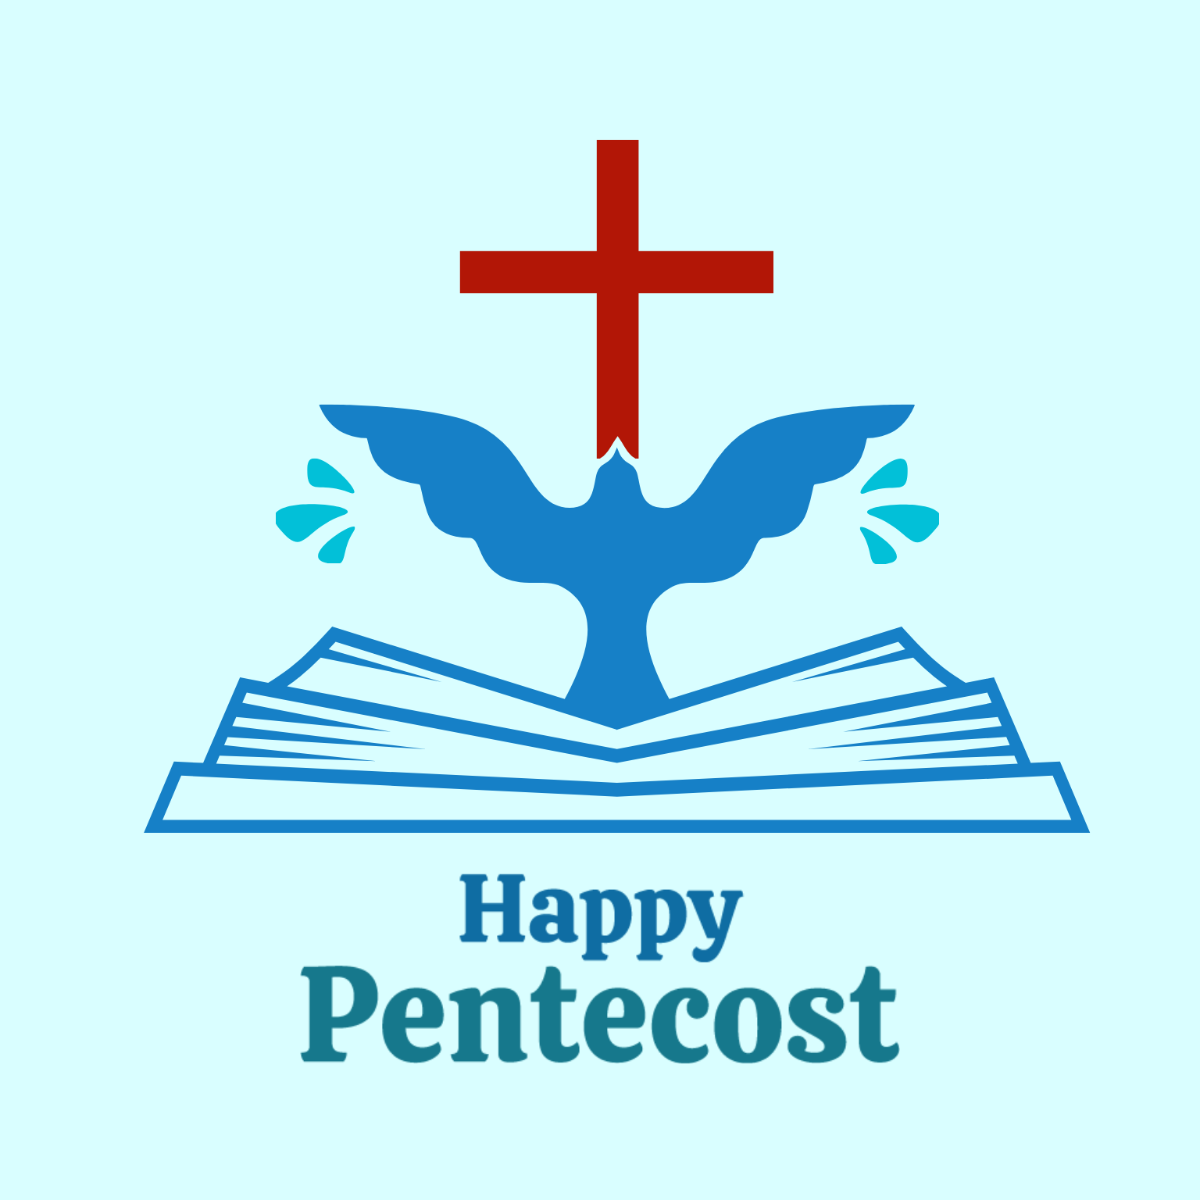 Free Happy Pentecost Illustration Template